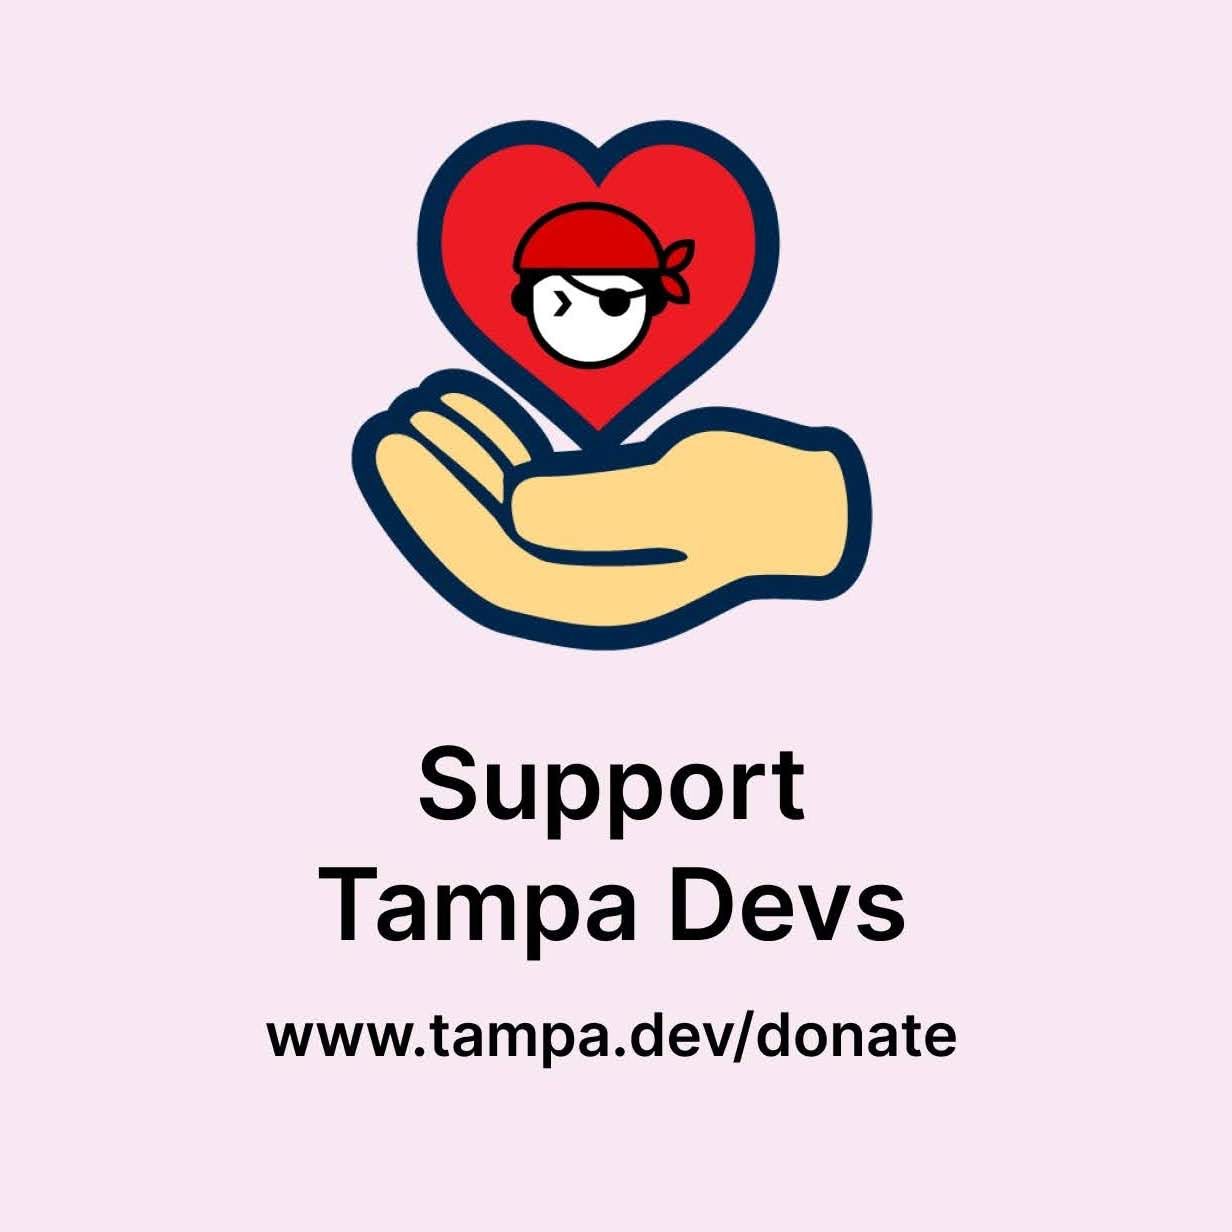 Support Tampa Devs!